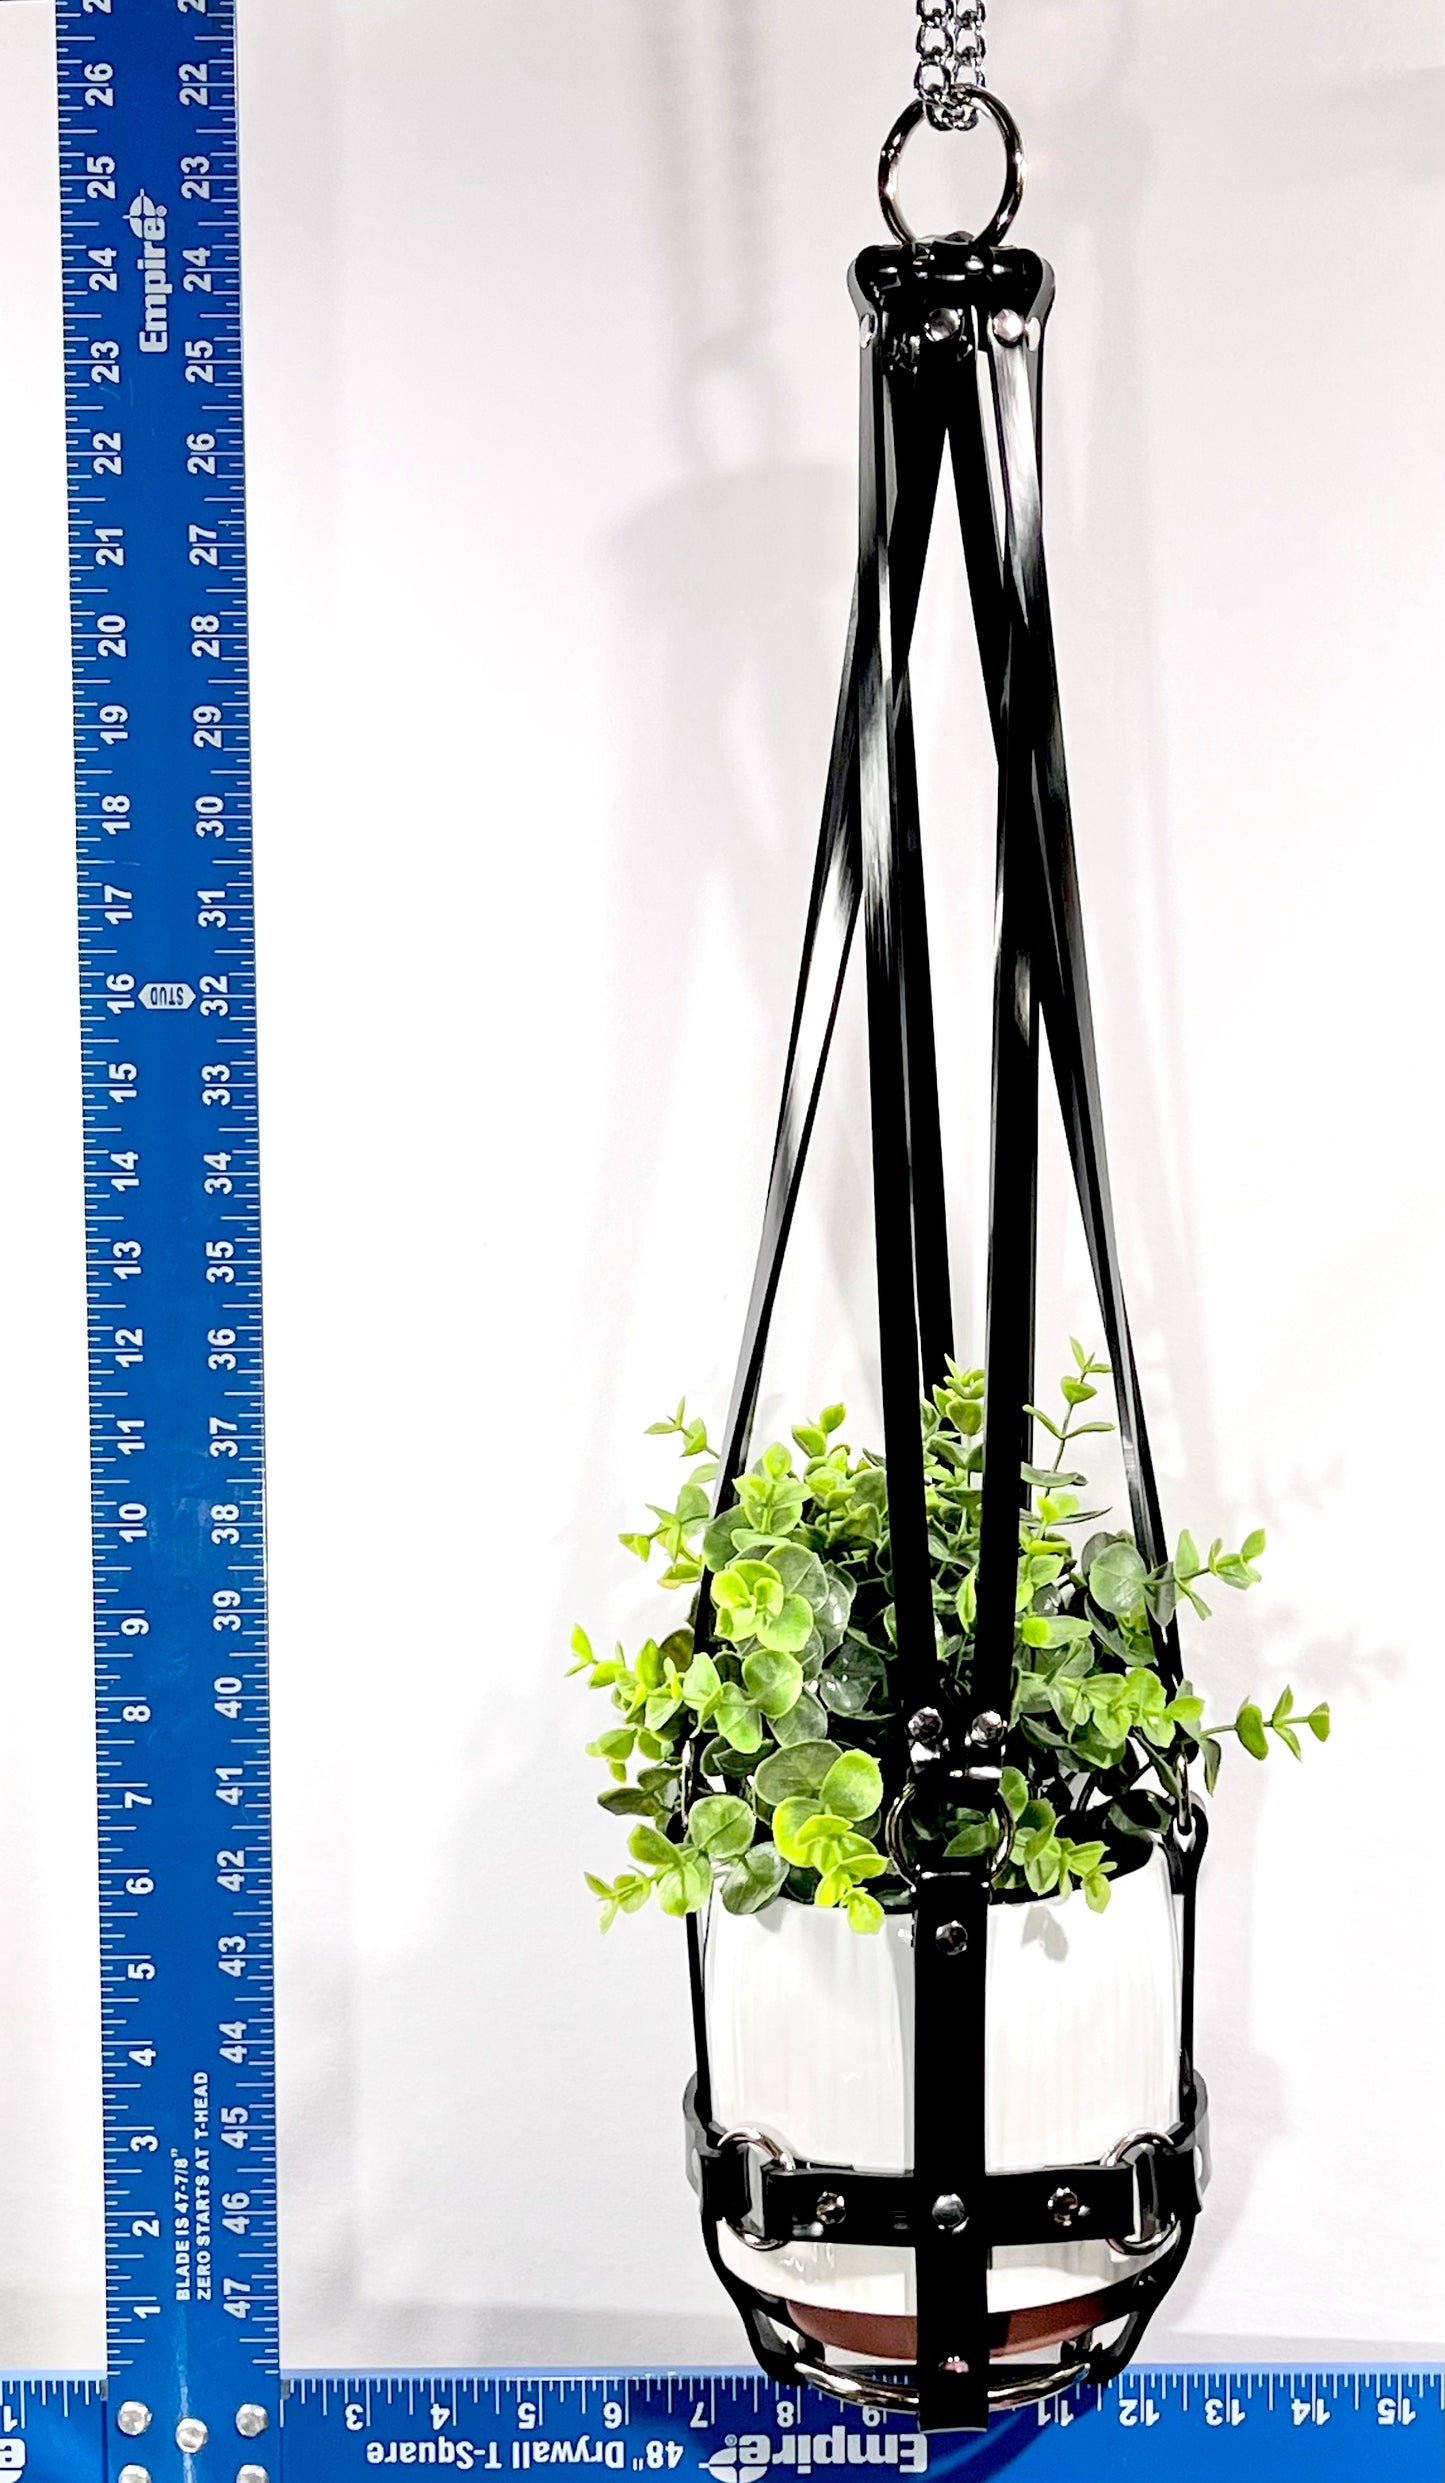 Basic Bitch 6" Plant Hanger in Black